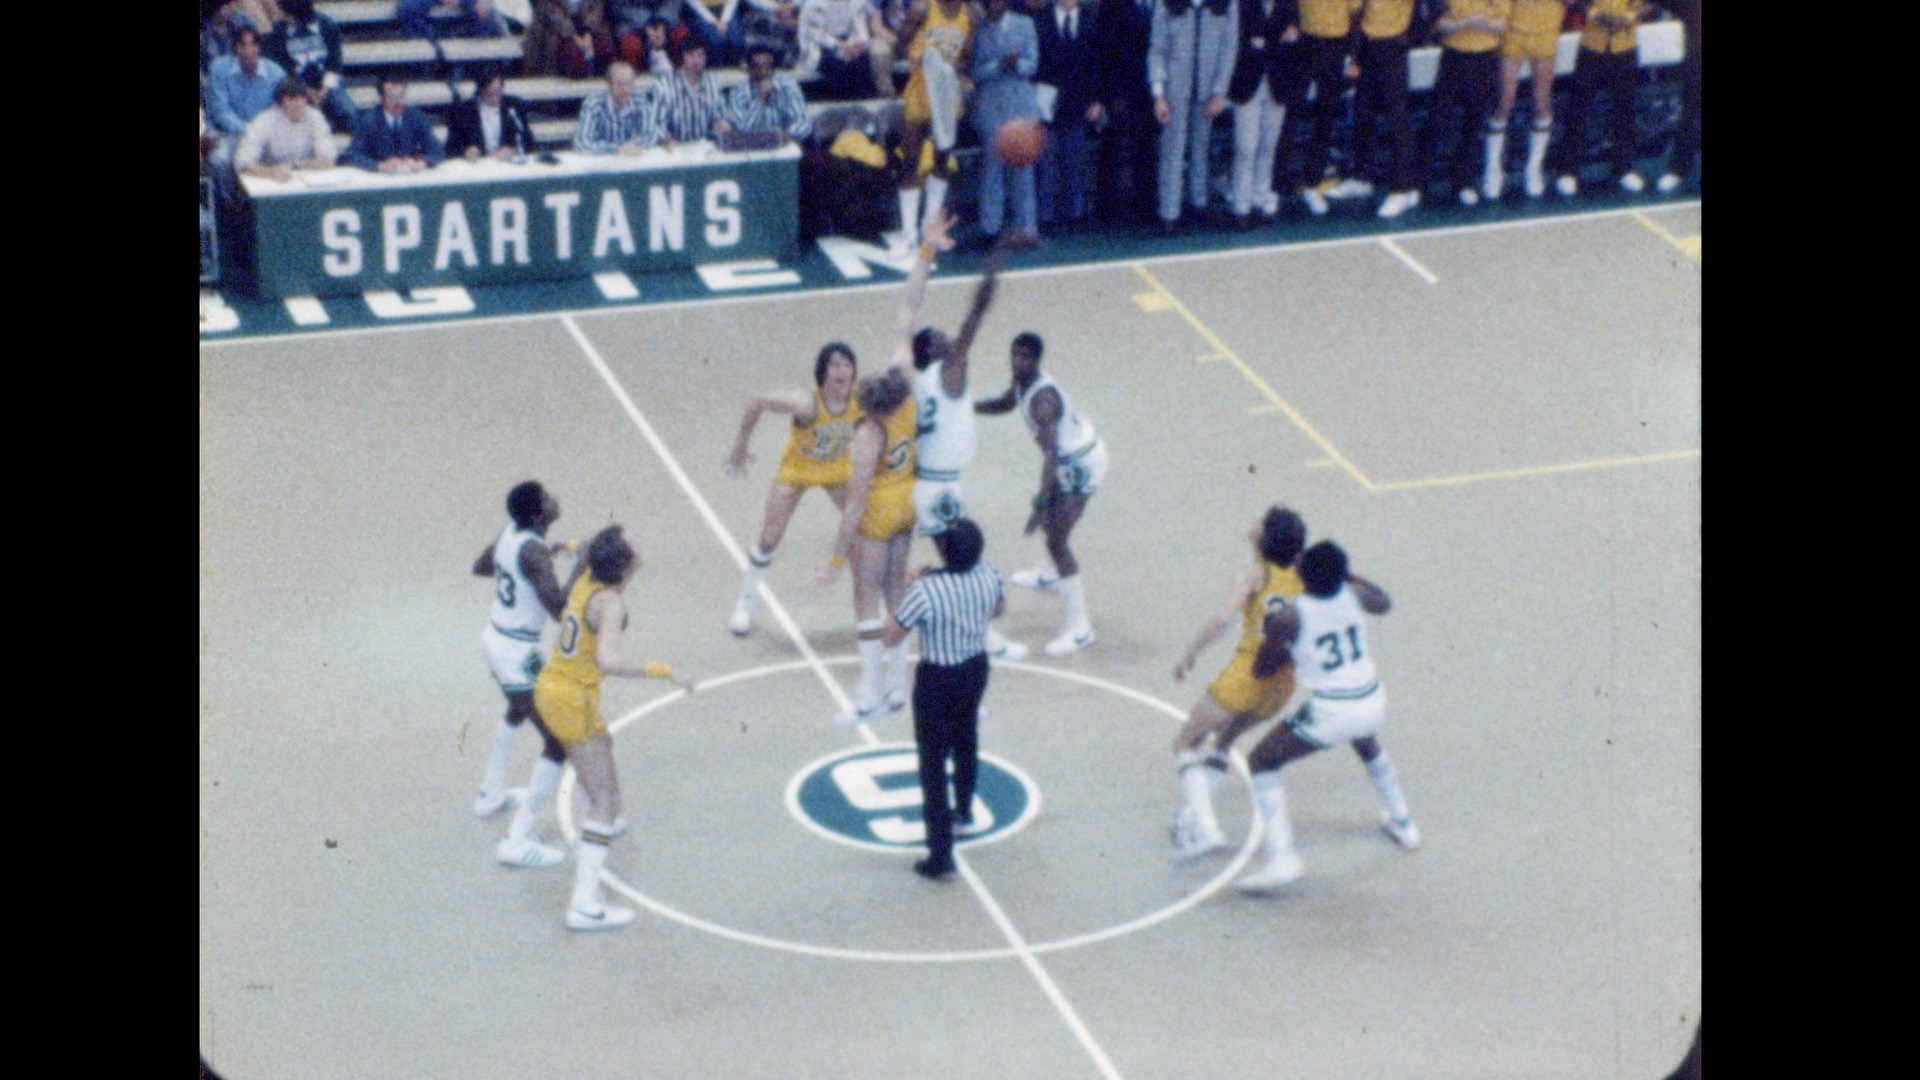 MSU Basketball vs. Western Michigan, 1977